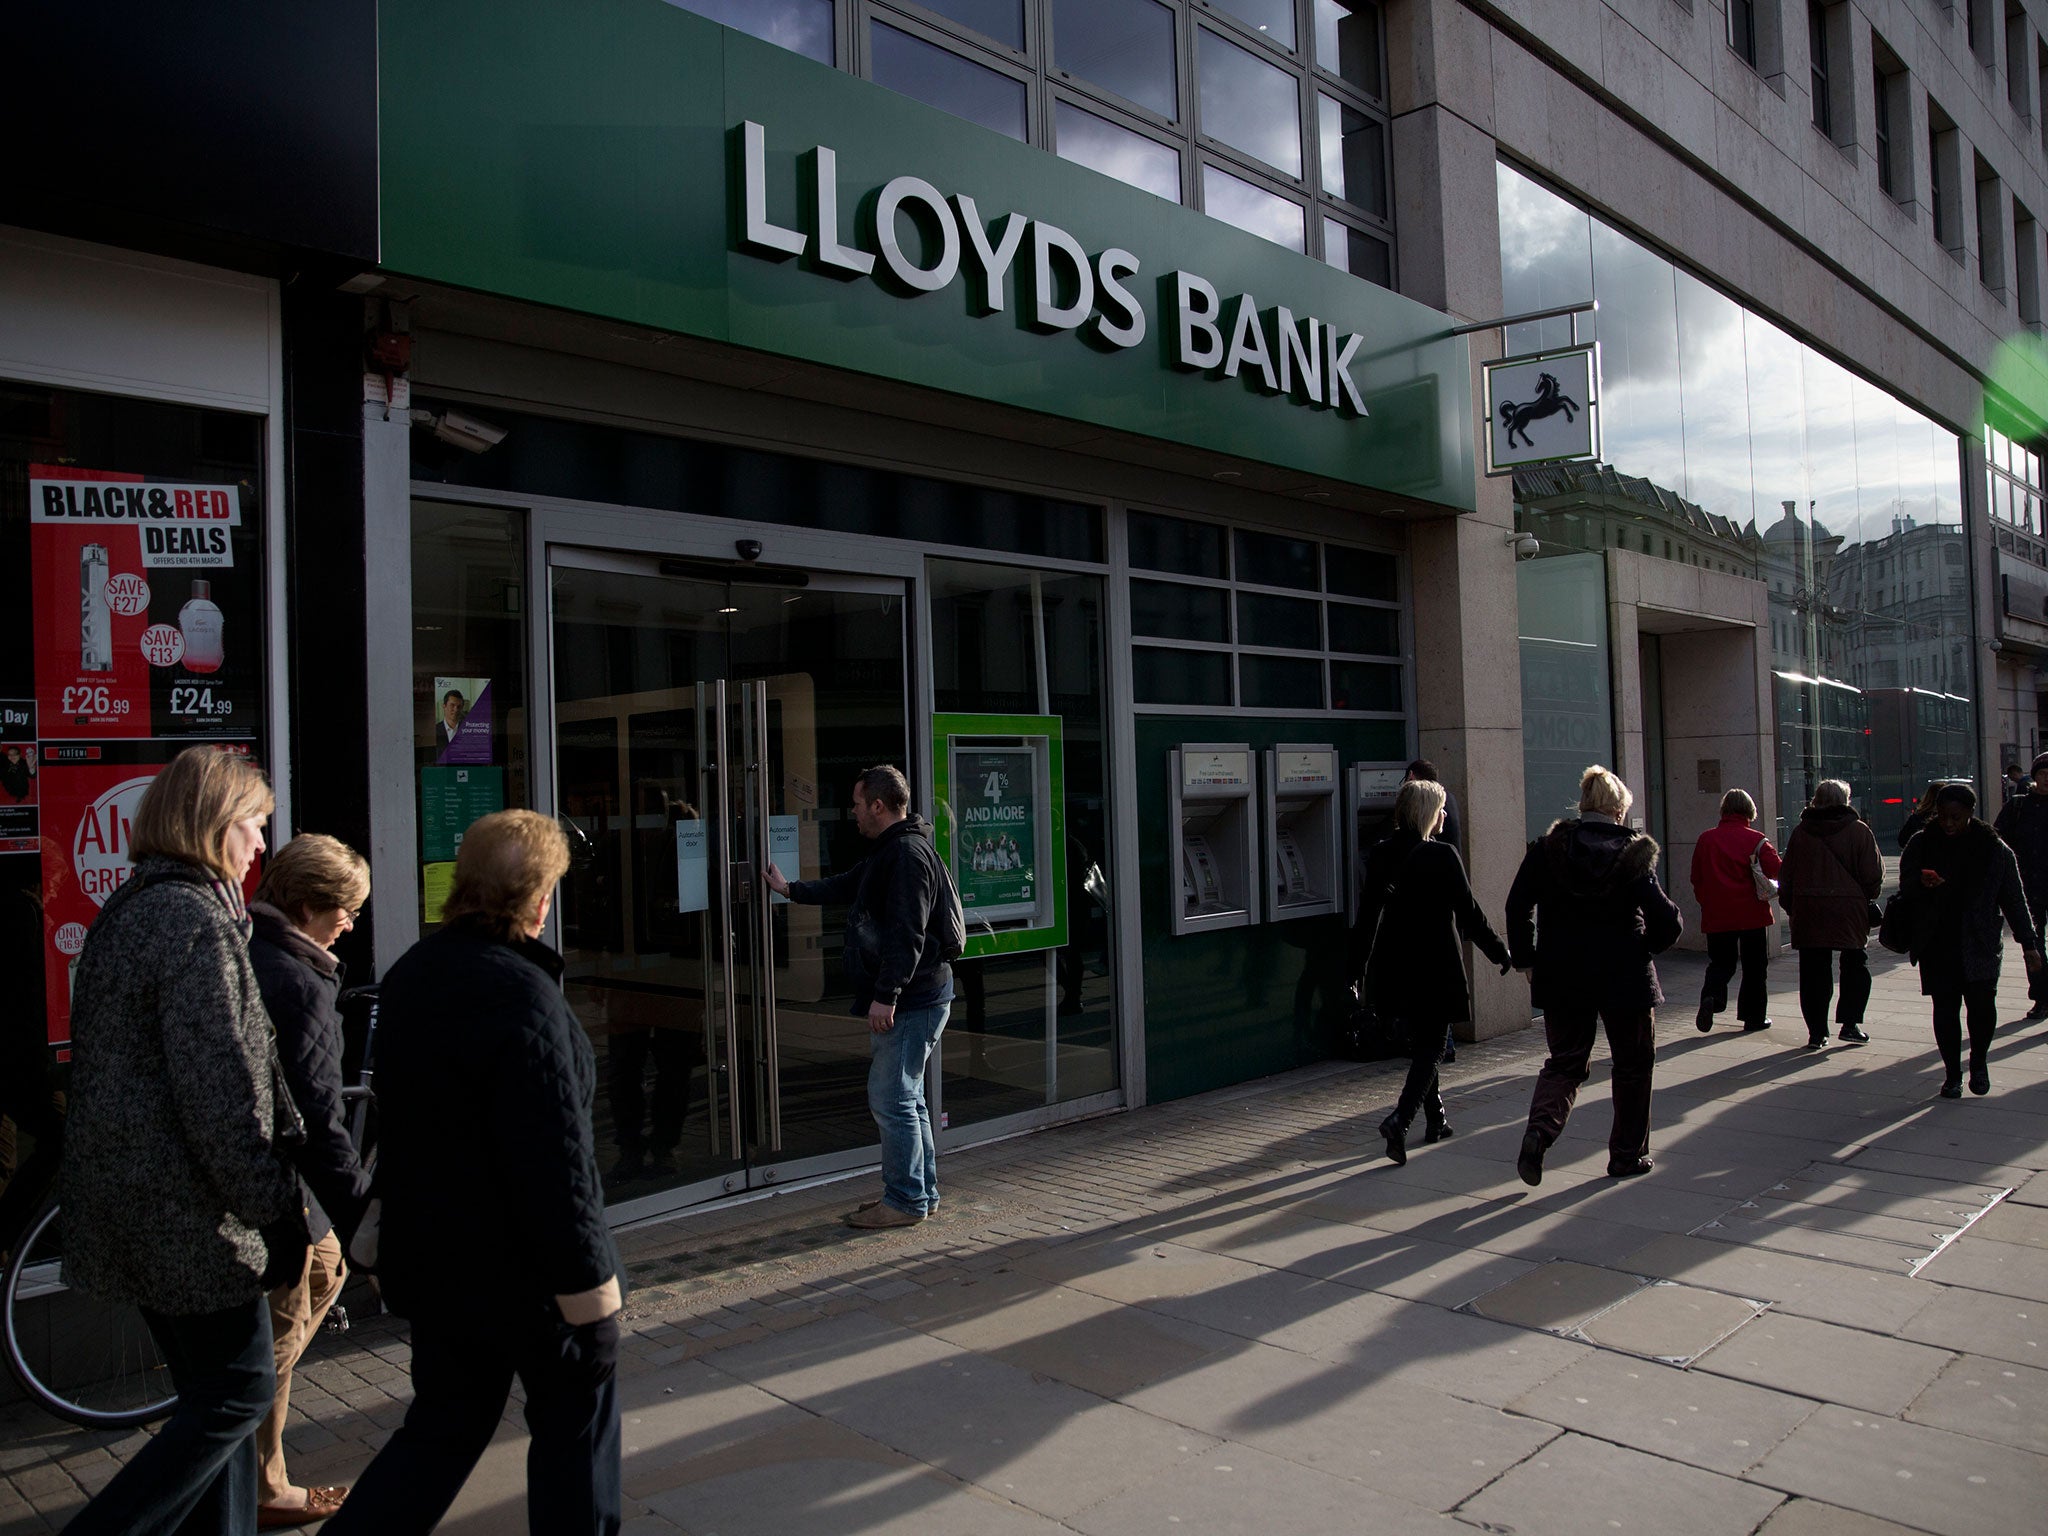 Lloyds’ share price rose 6 per cent